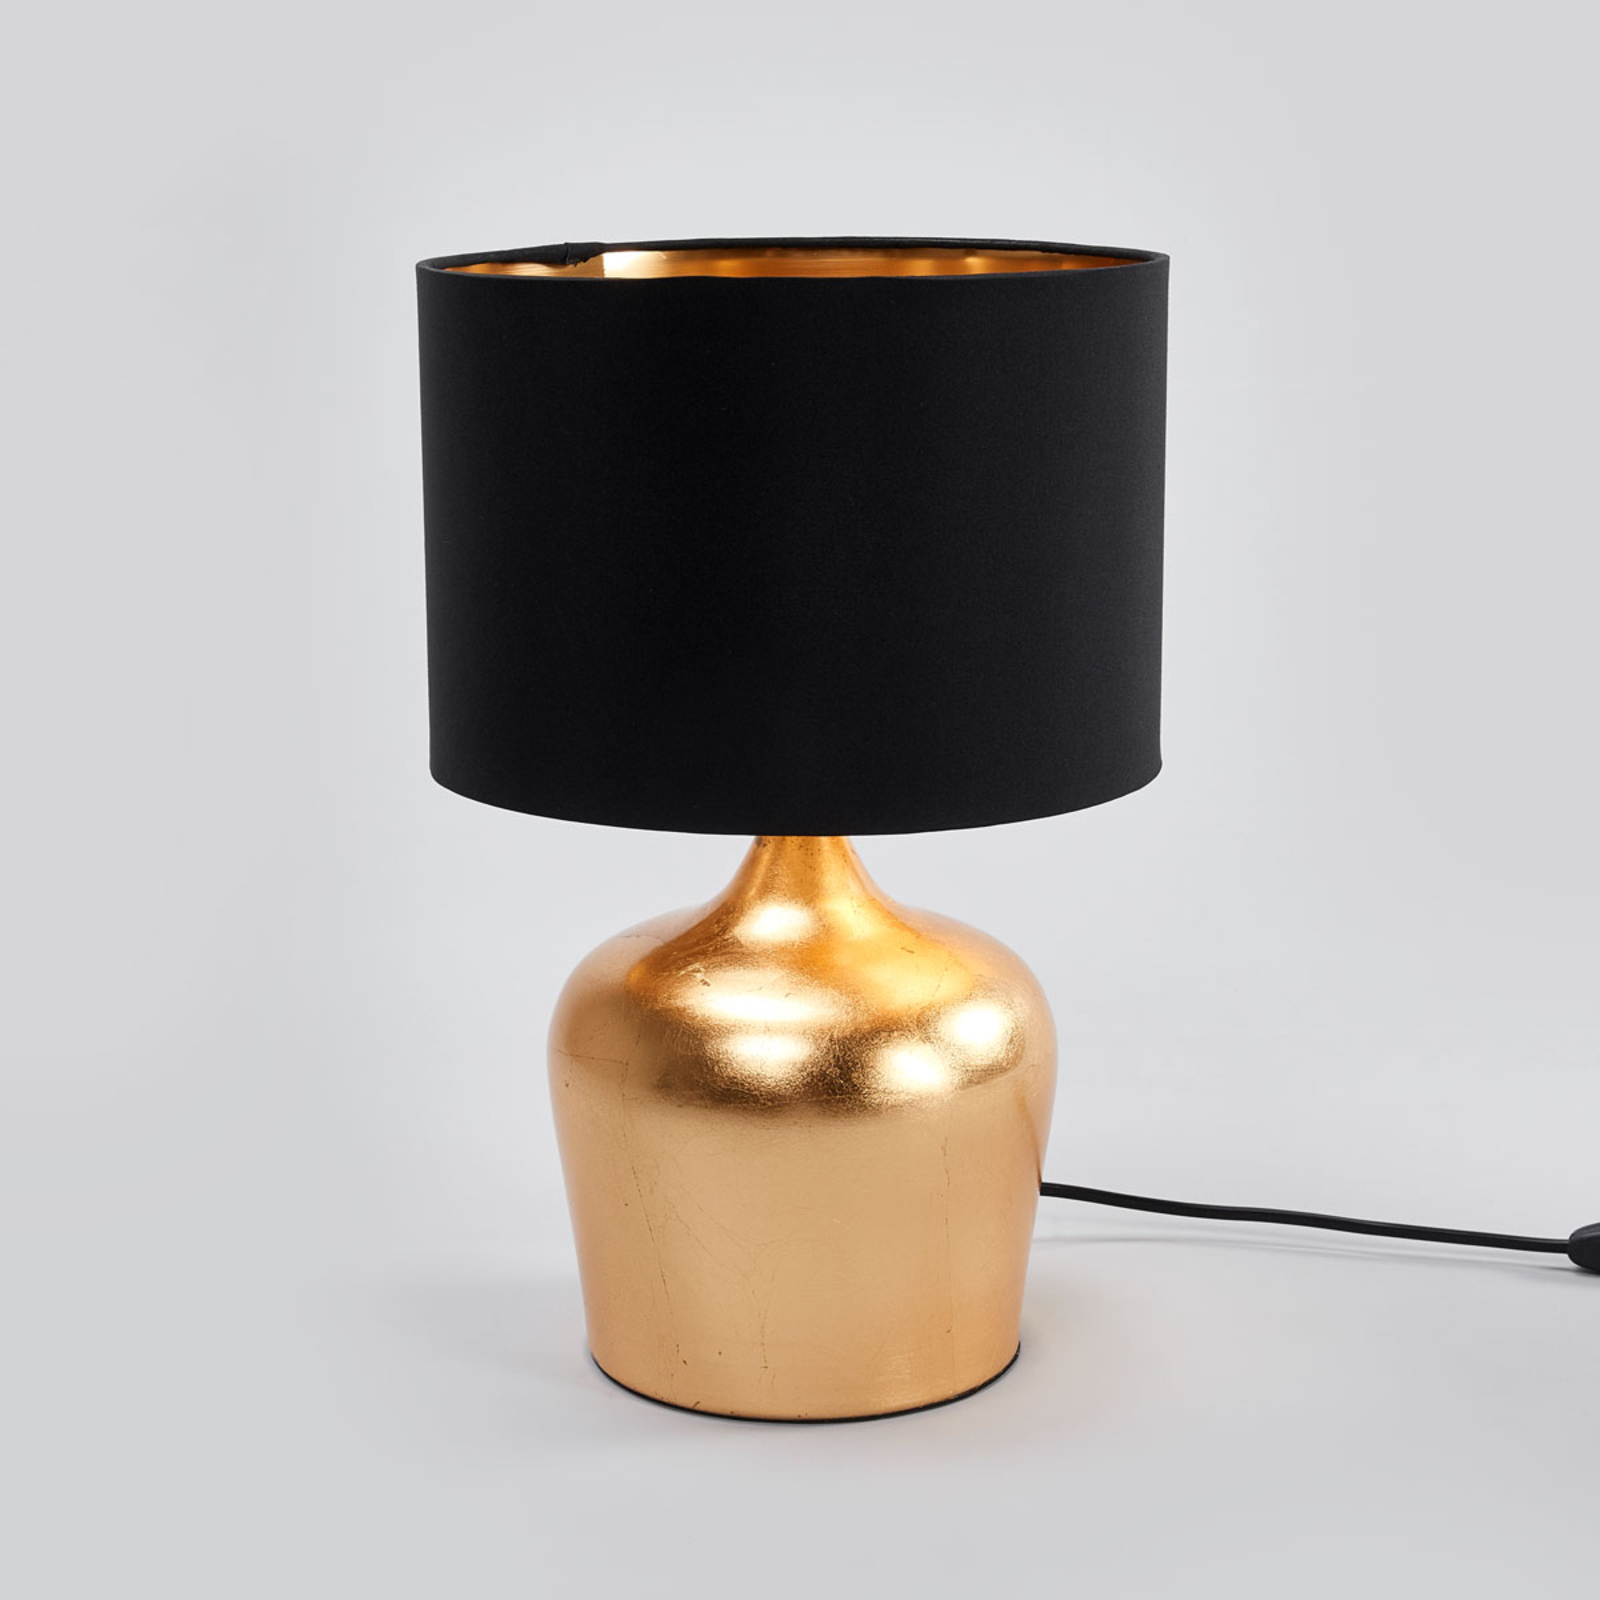 Graceful Manalba table lamp